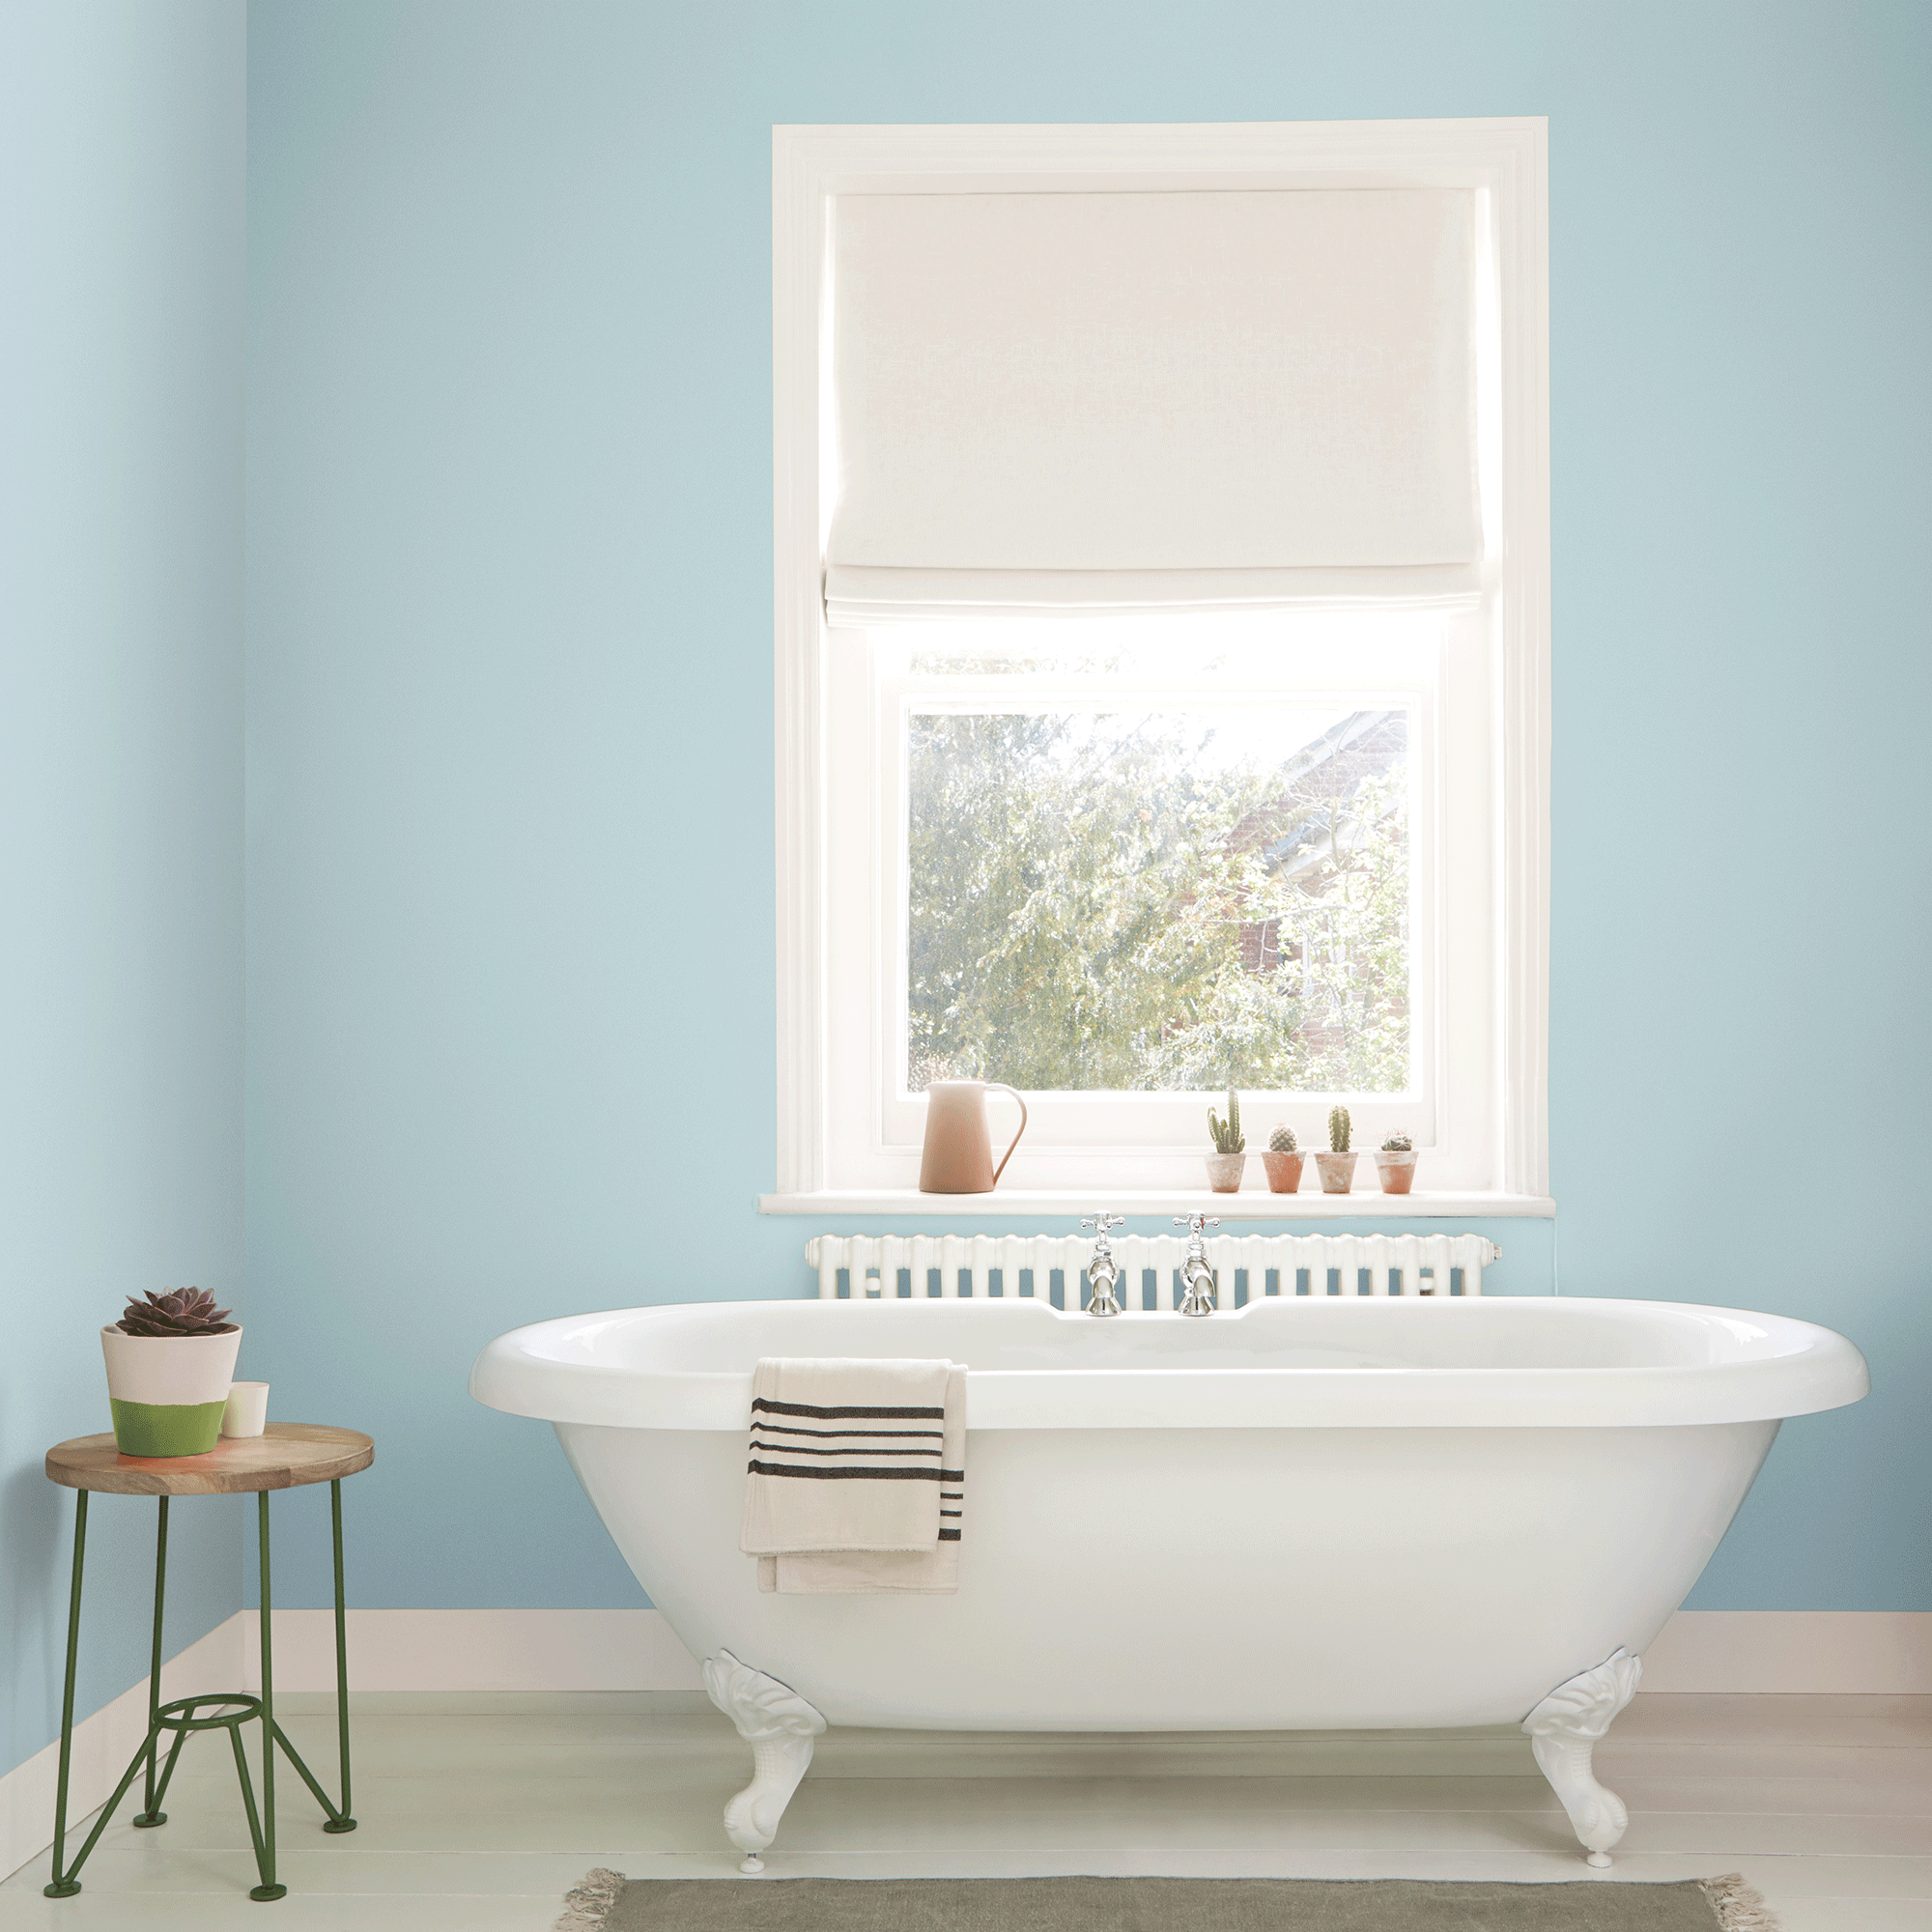 Blue bathroom with white bath and window